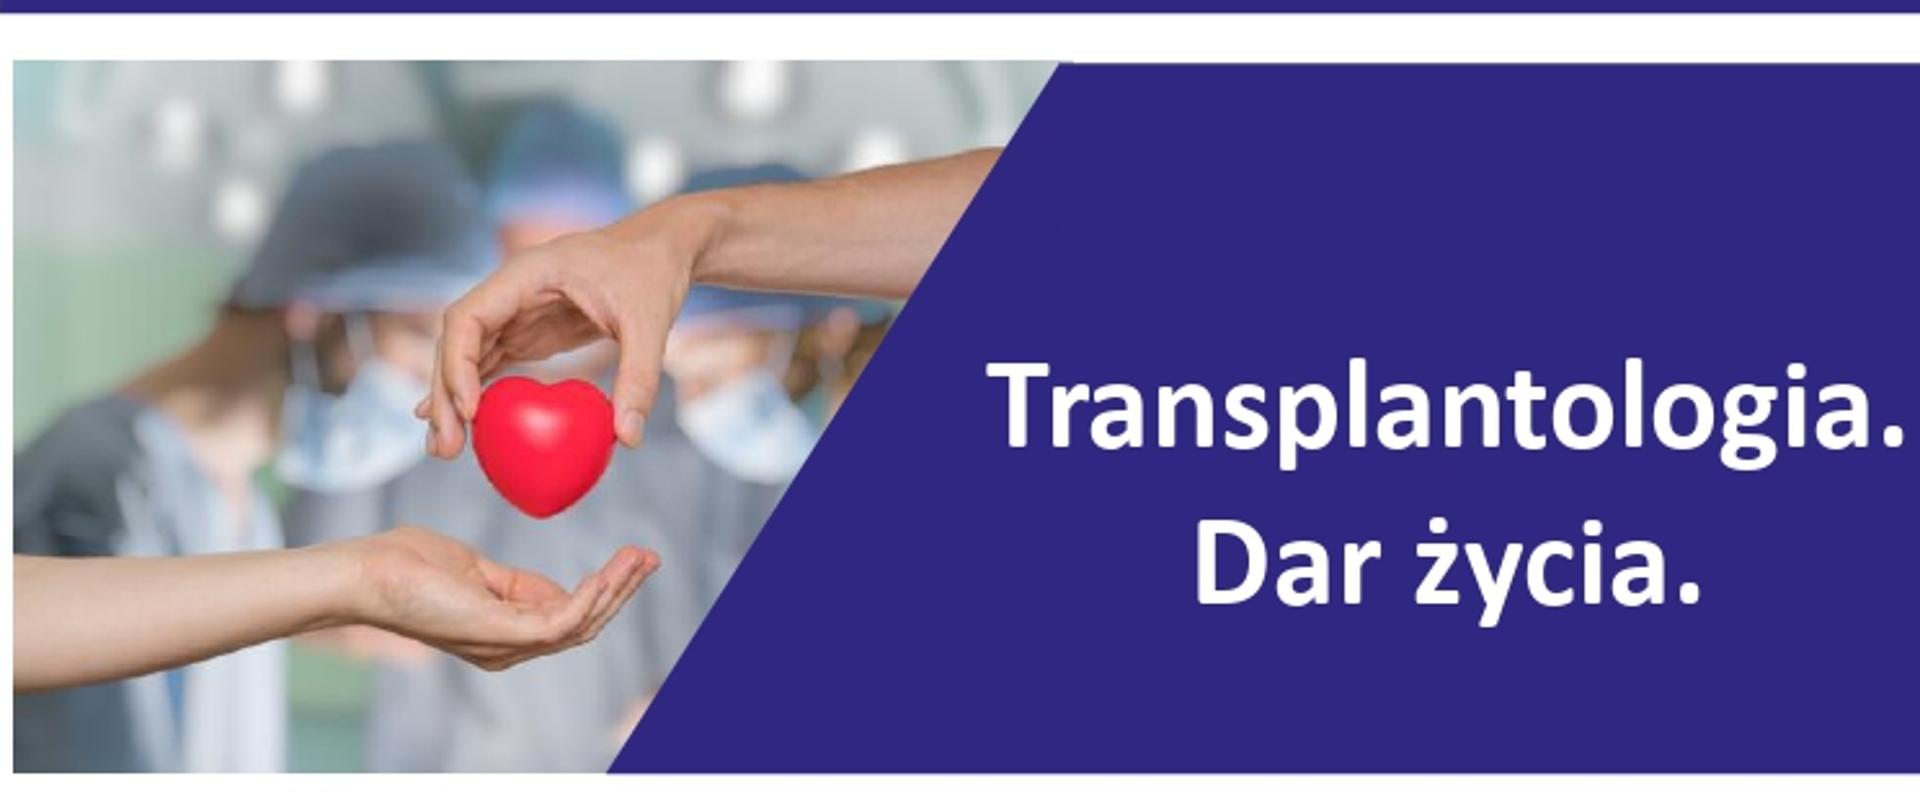 2501_transplantologia_page-0001